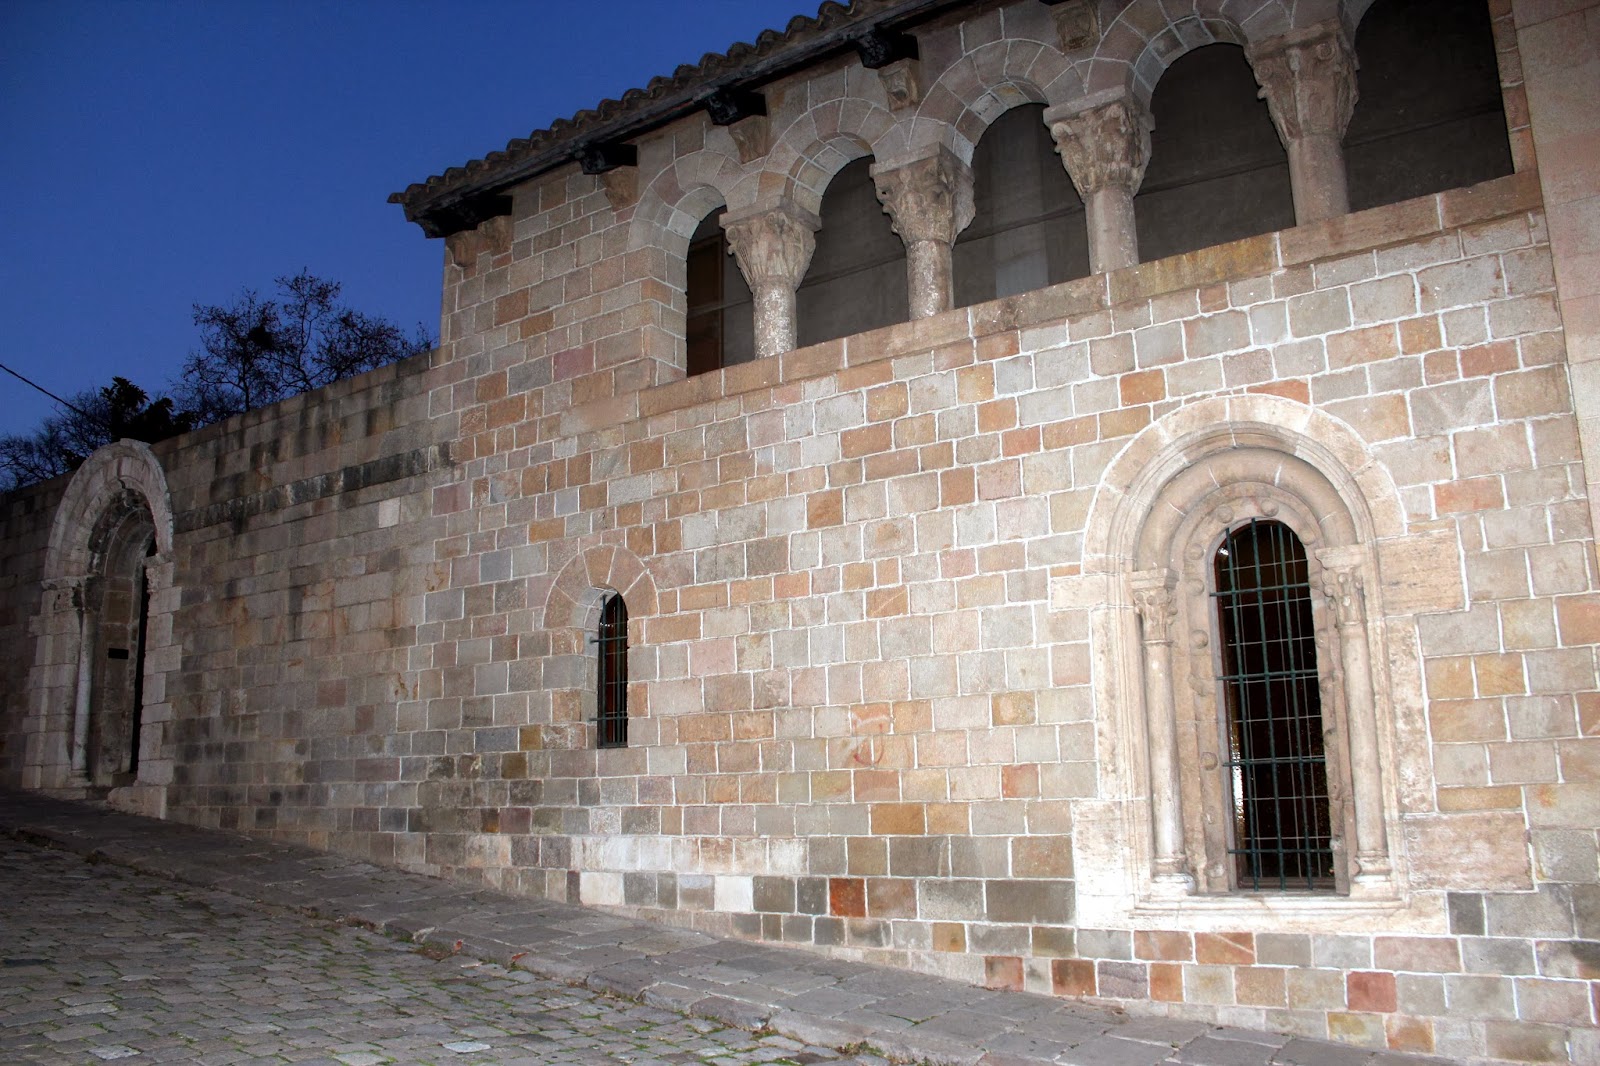 Monasterio de Pedralbes